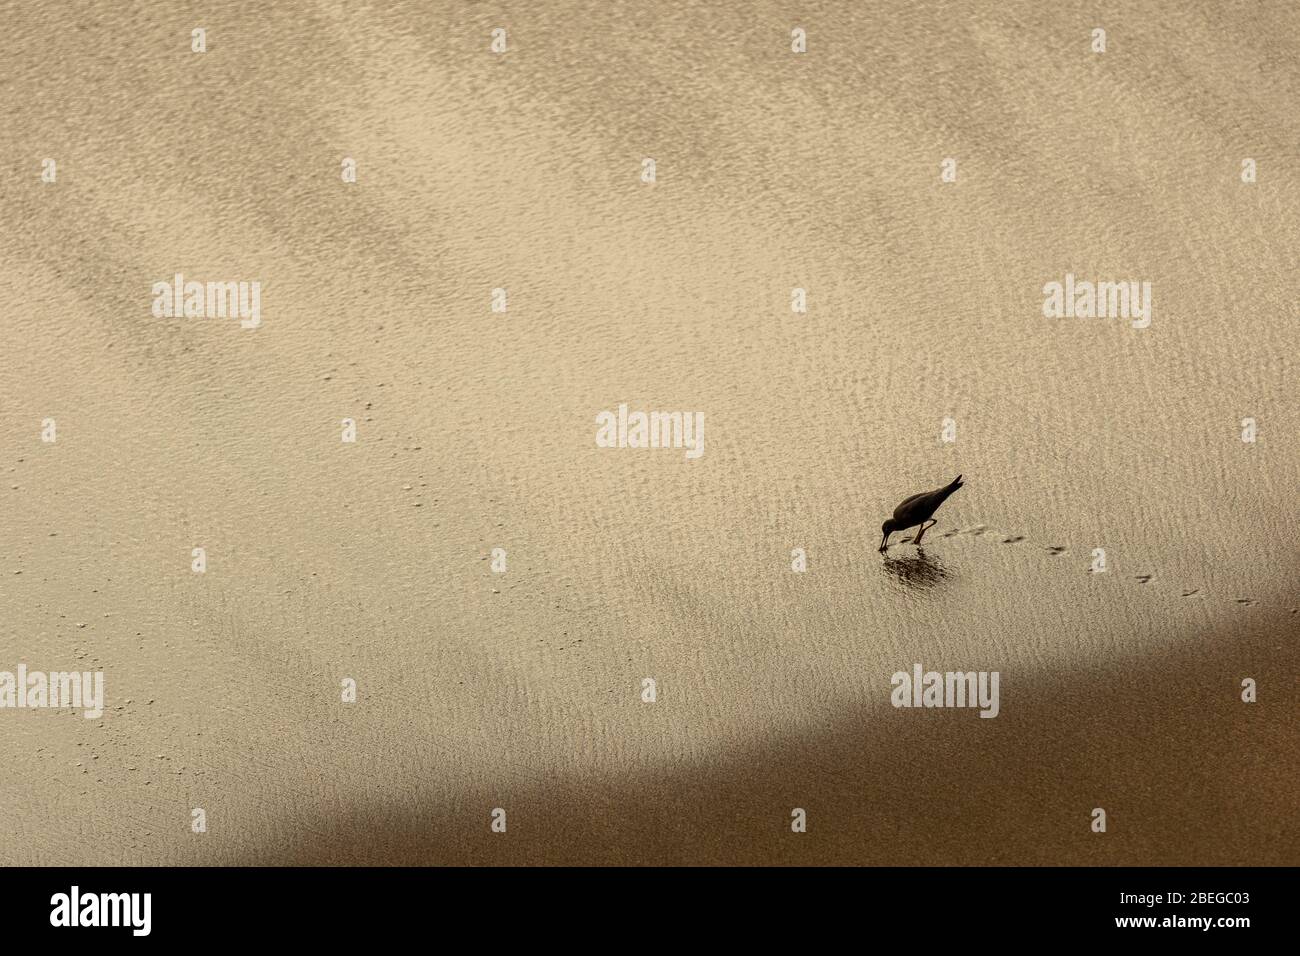 A shore bird silhouetted along the sandy shore Stock Photo